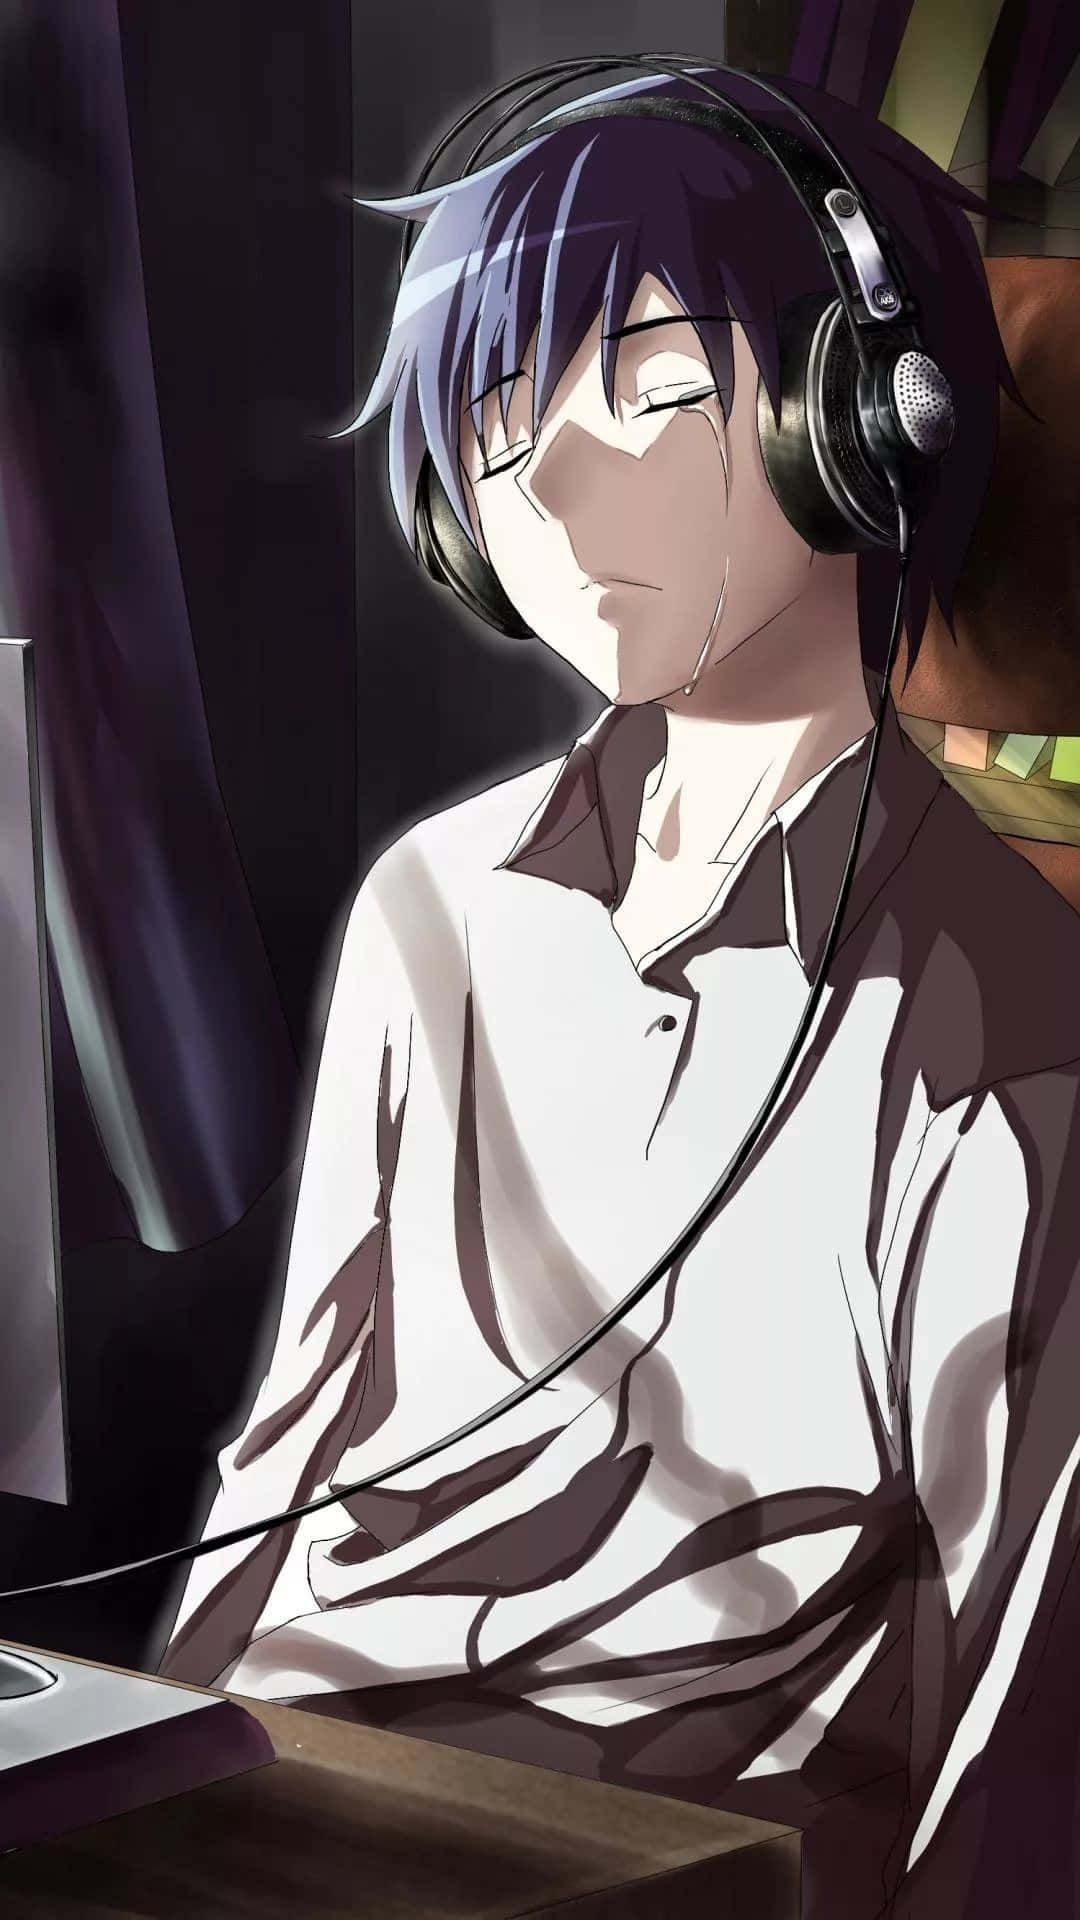 Sad Depressing Anime Haruka Nanase Crying Headphones Wallpaper